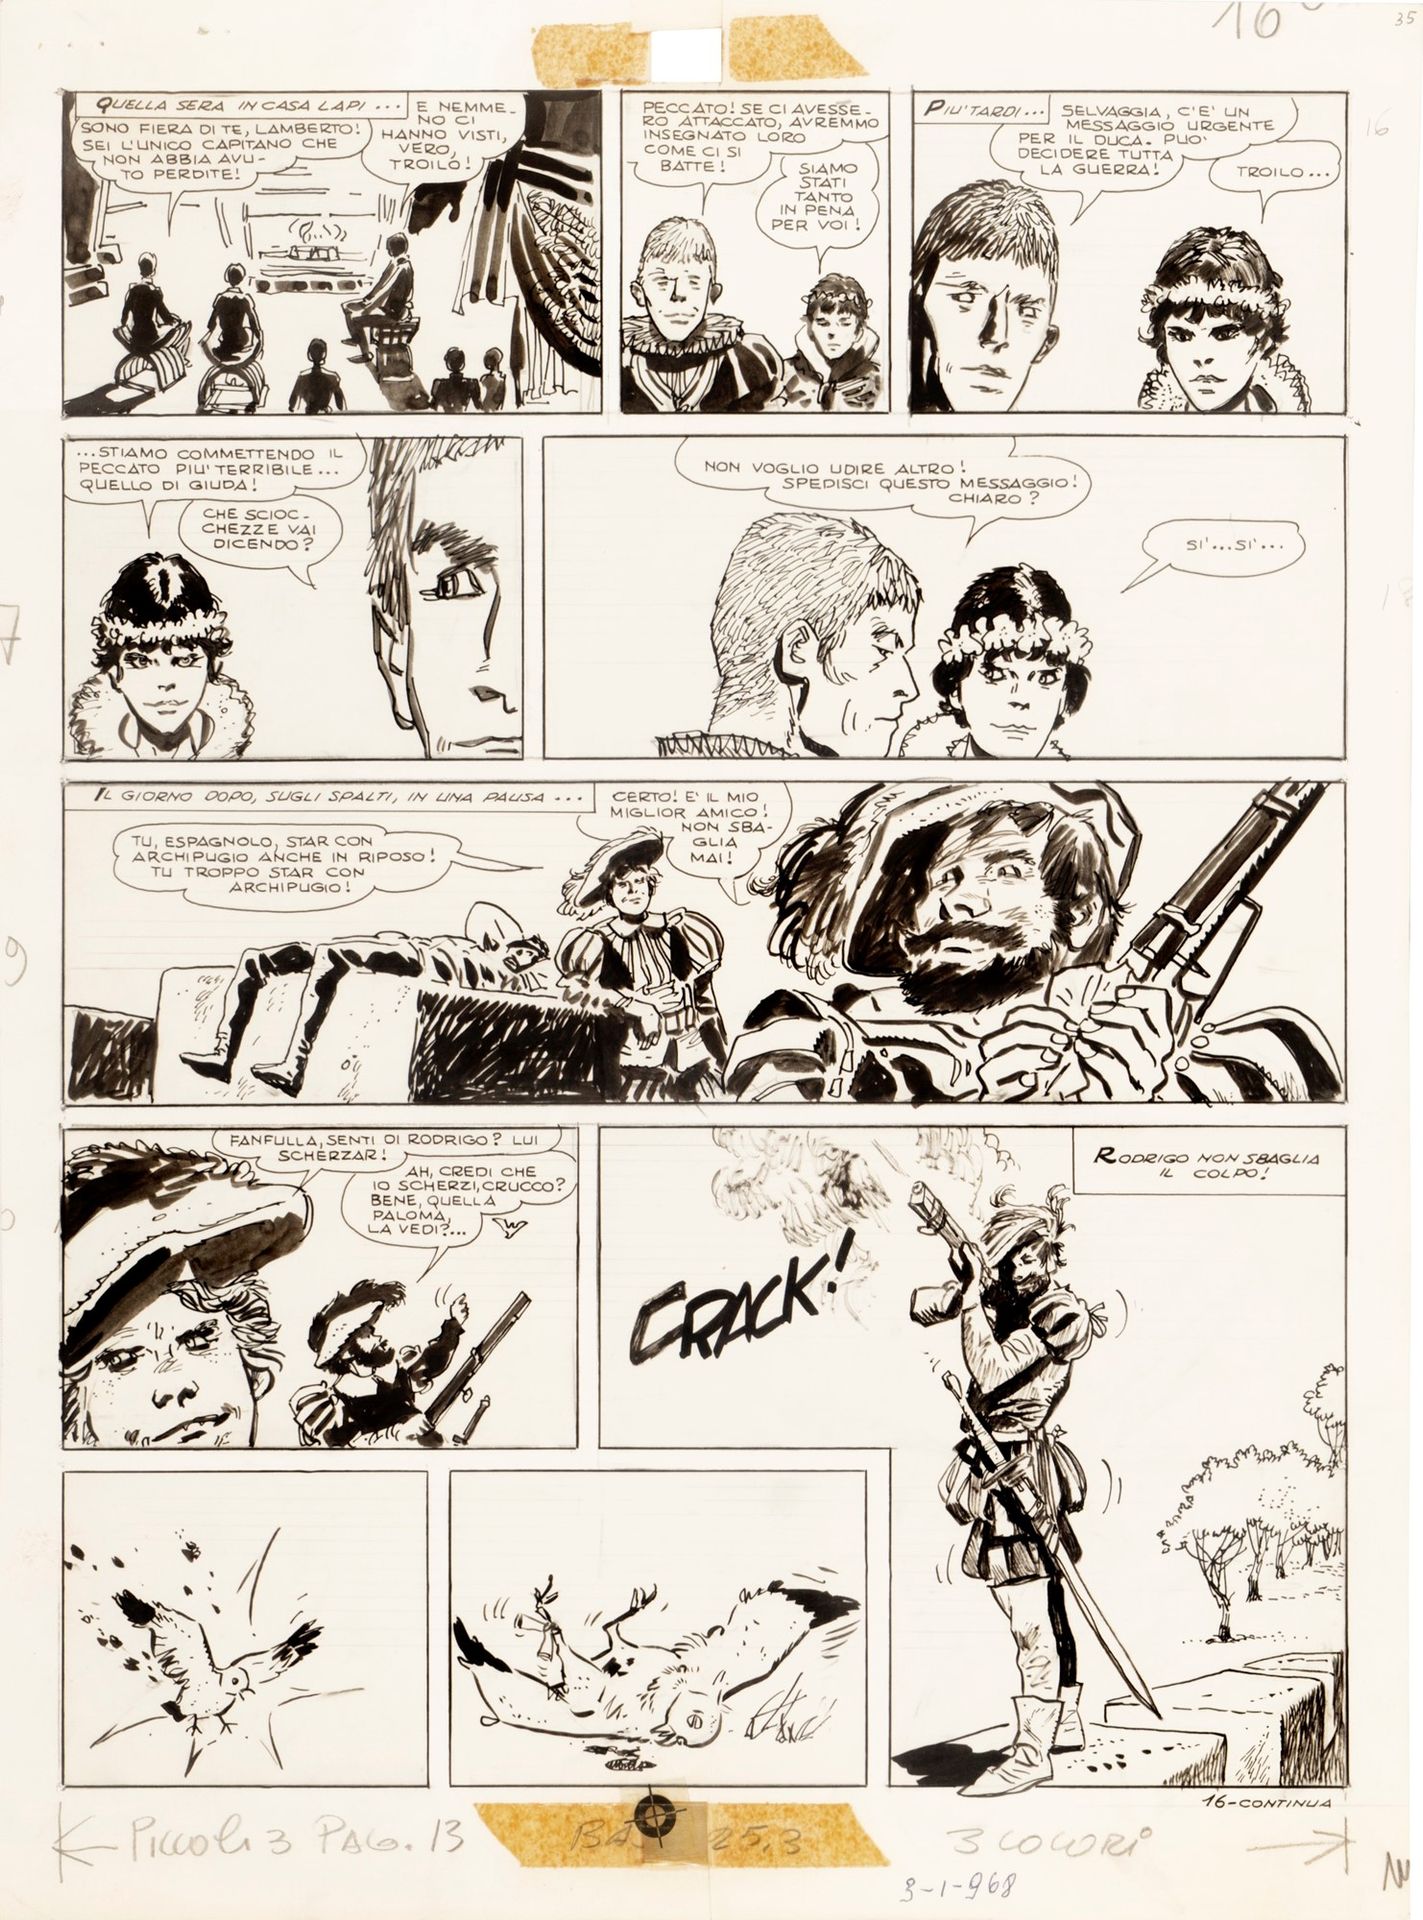 HUGO PRATT Le avventure di Fanfulla, 1967

薄纸板上的铅笔和墨水
28 x 37 cm
普拉特为 "Le avvent&hellip;